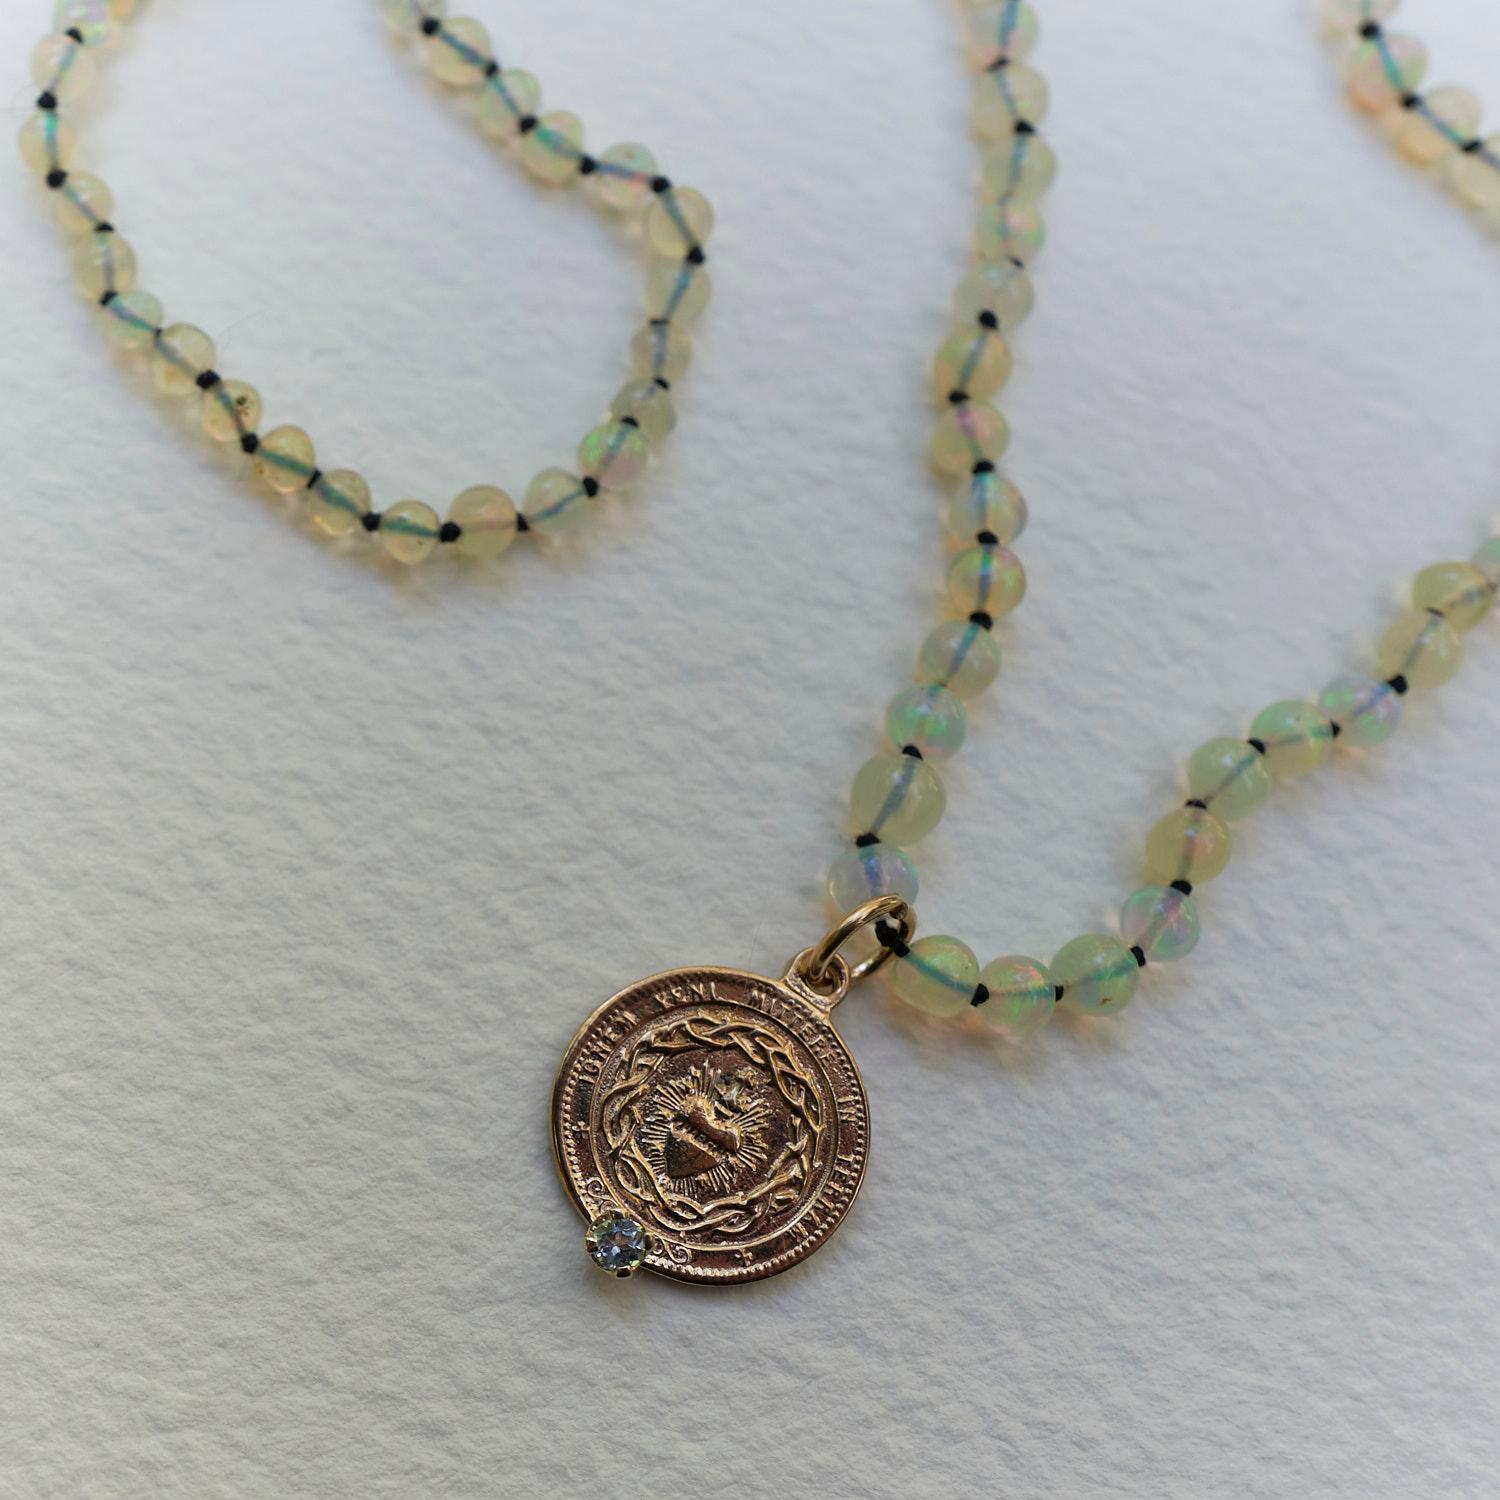 Egyptian Opal Aquamarine Choker Necklace Medal Heart Bronze J Dauphin

18